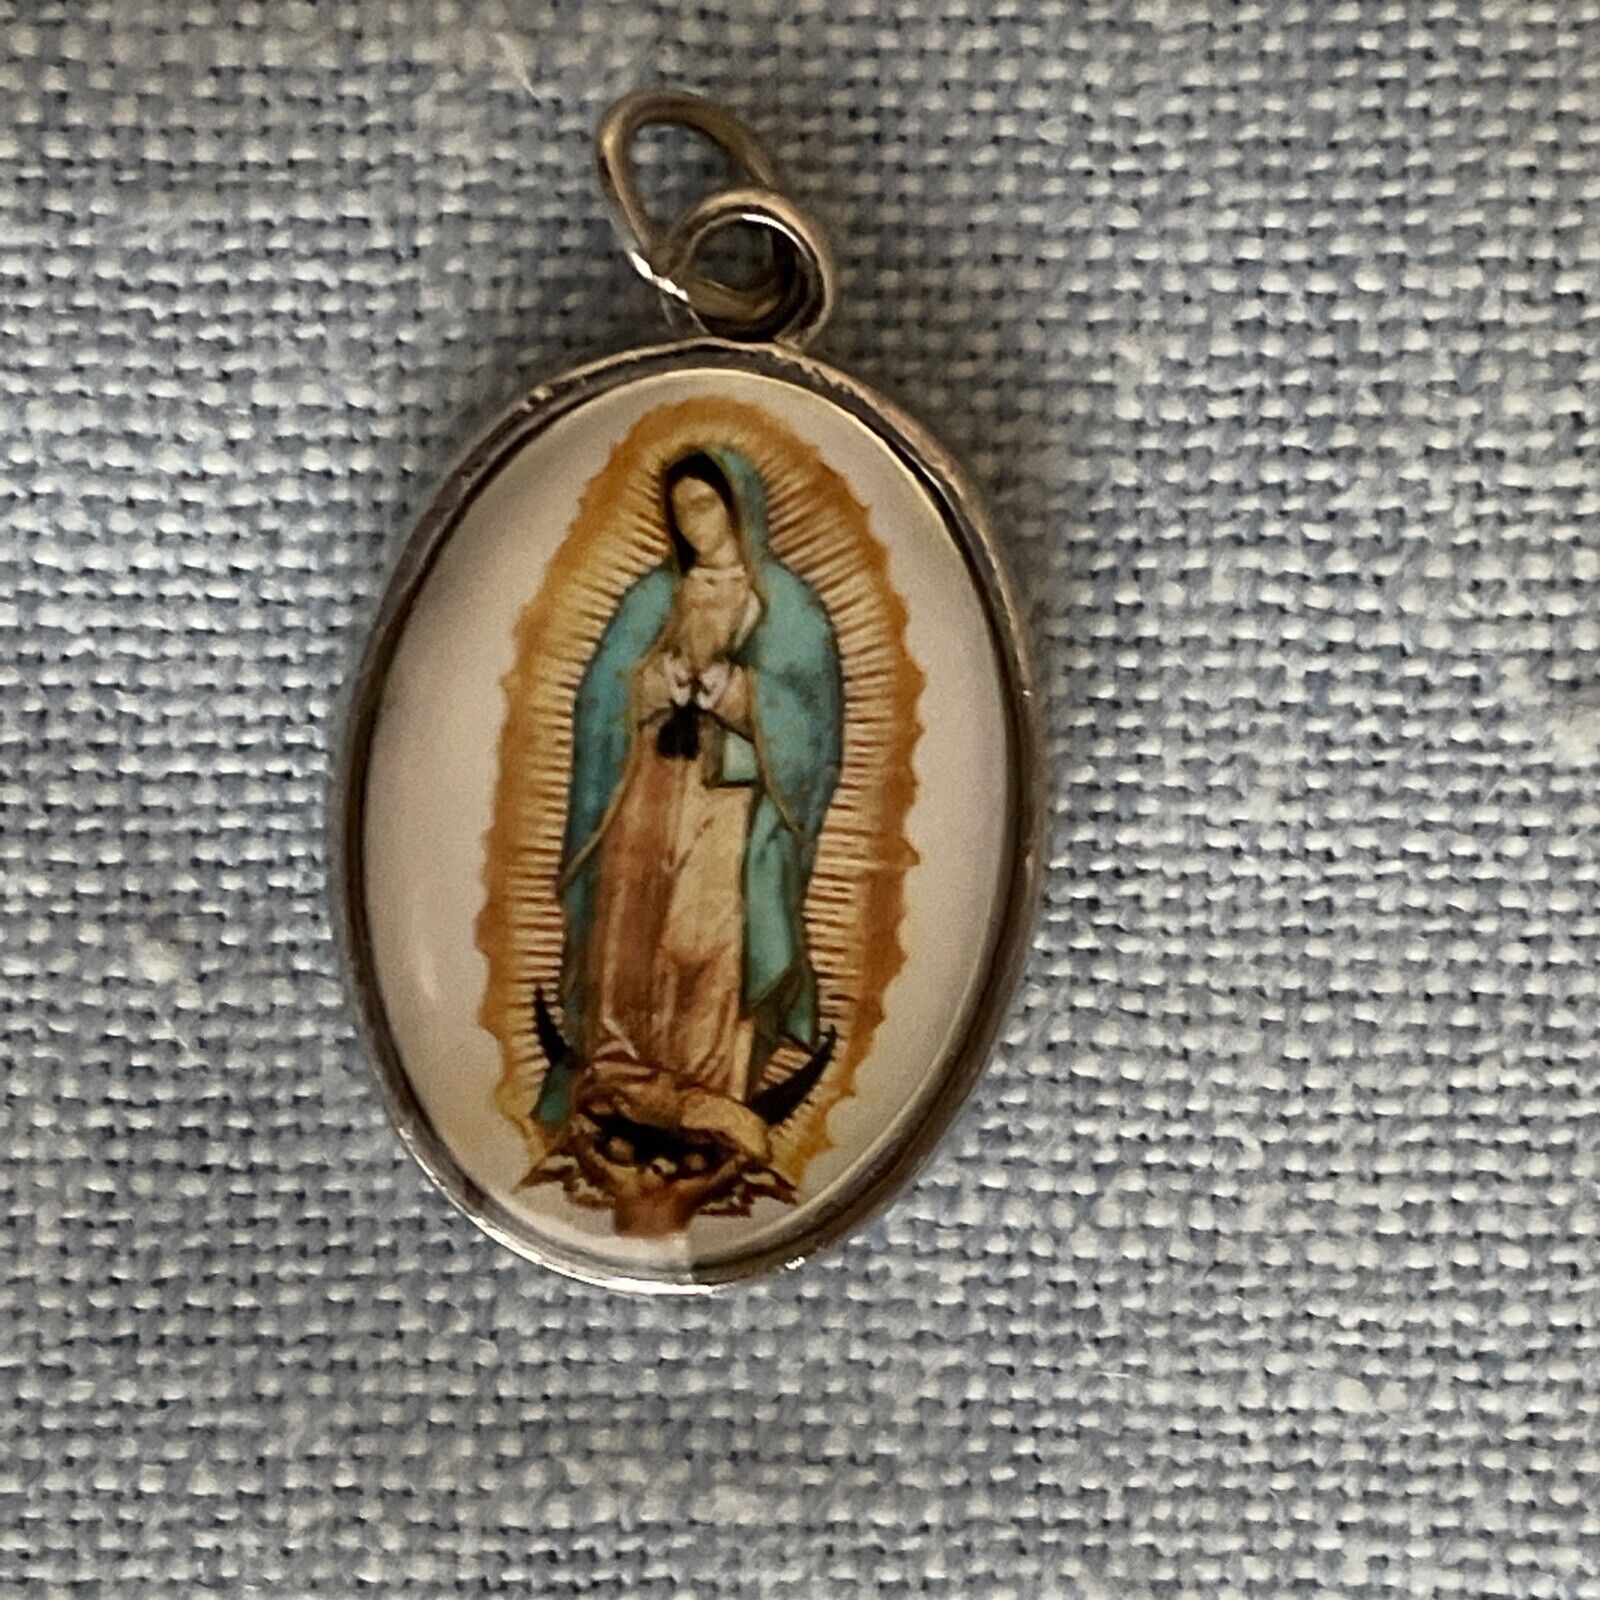 Virgen De Guadalupe Virgin Mary Medal Pendant Charm | Silver Tone |